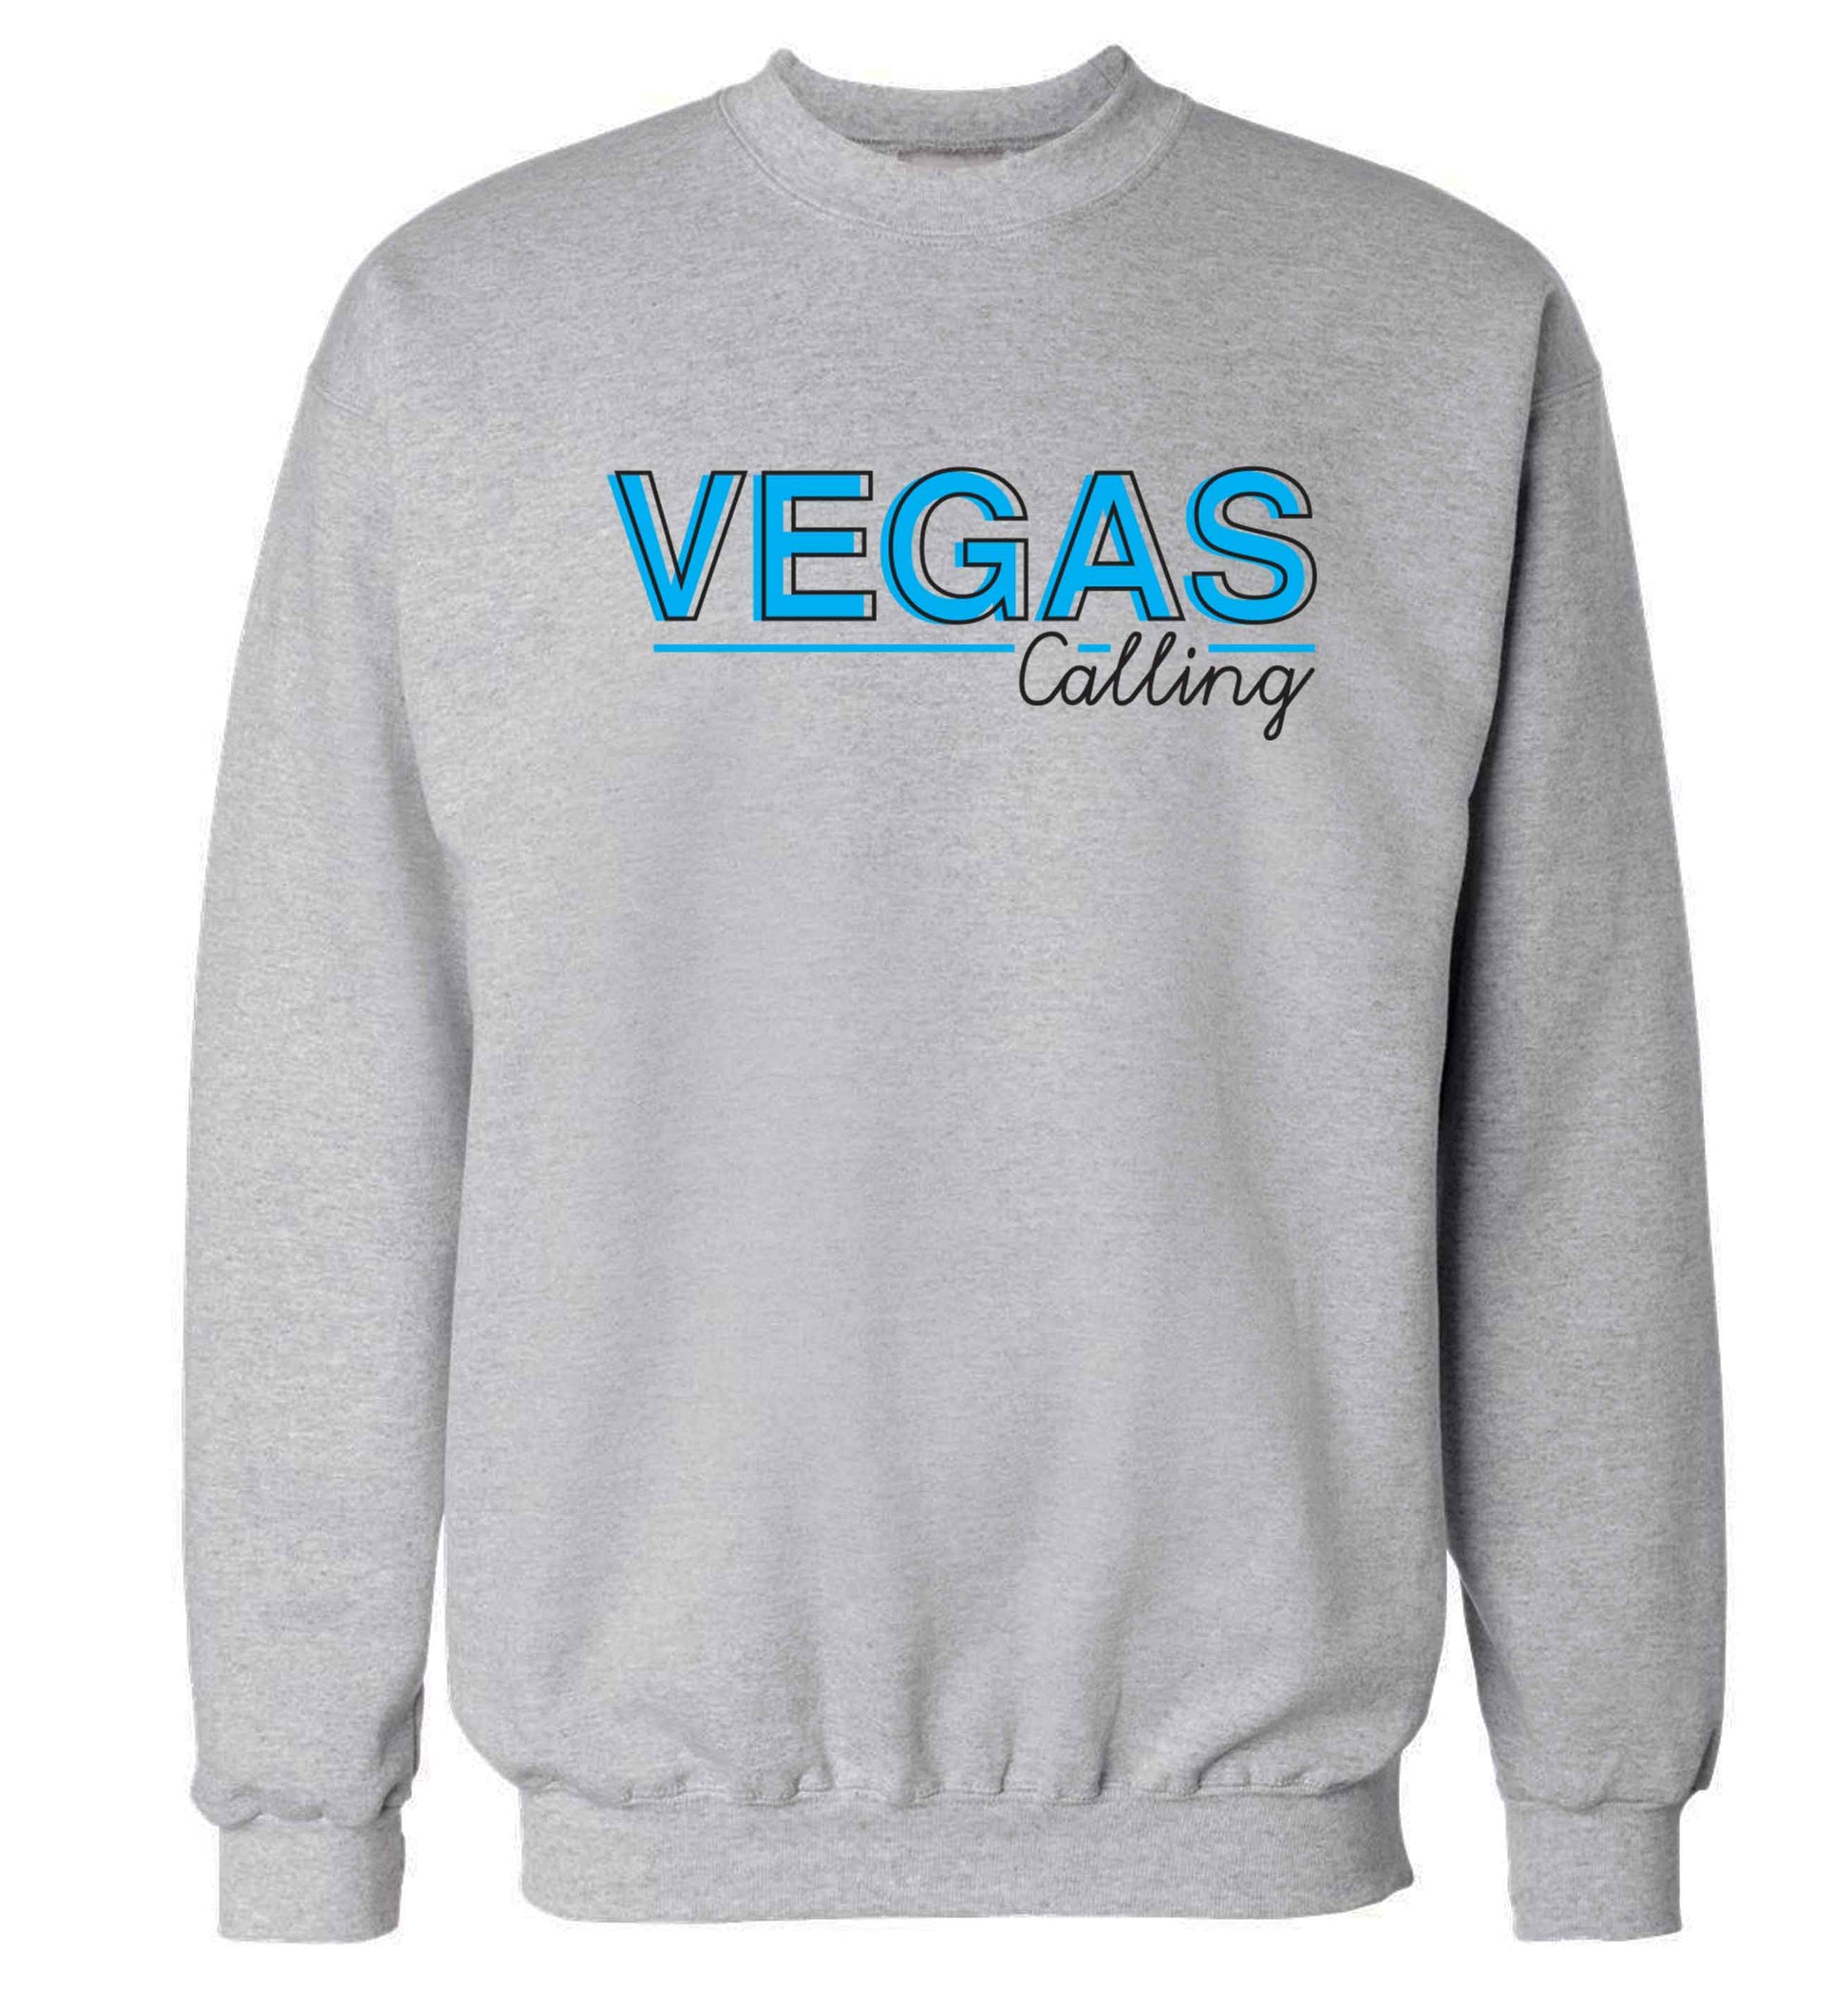 Vegas calling Adult's unisex grey Sweater 2XL